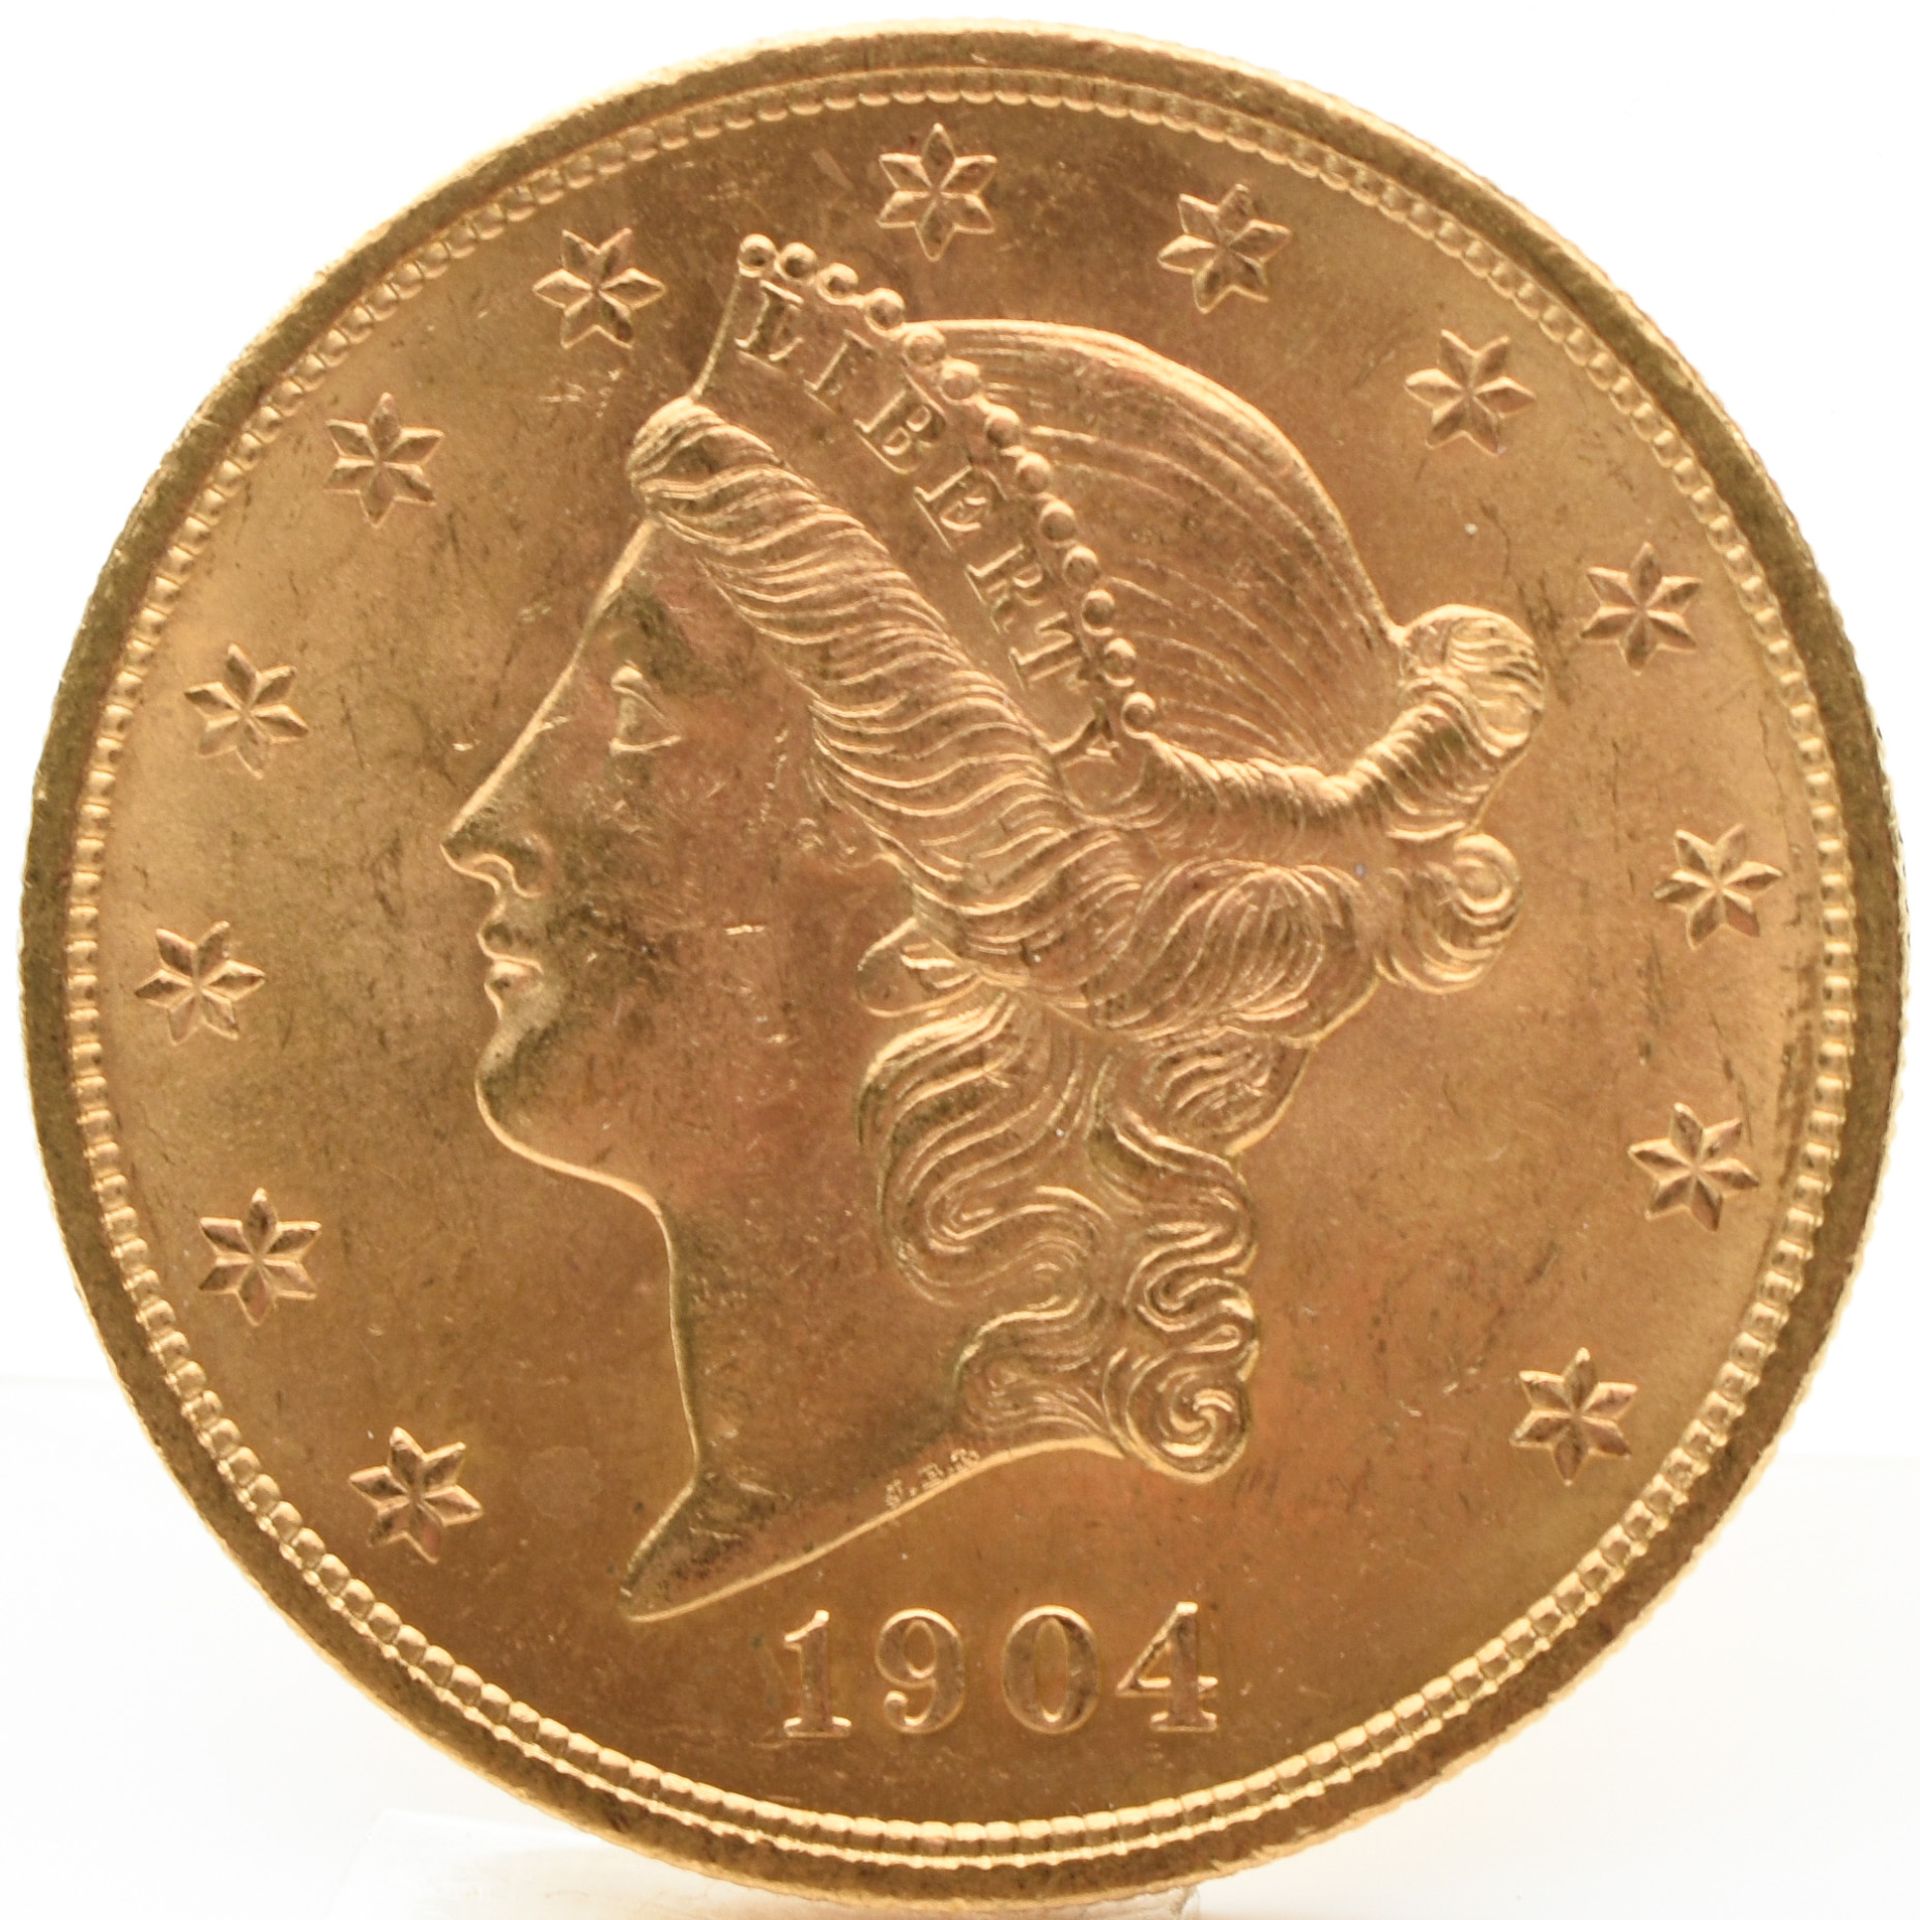 20 US-Dollar-Münze - Bild 2 aus 3